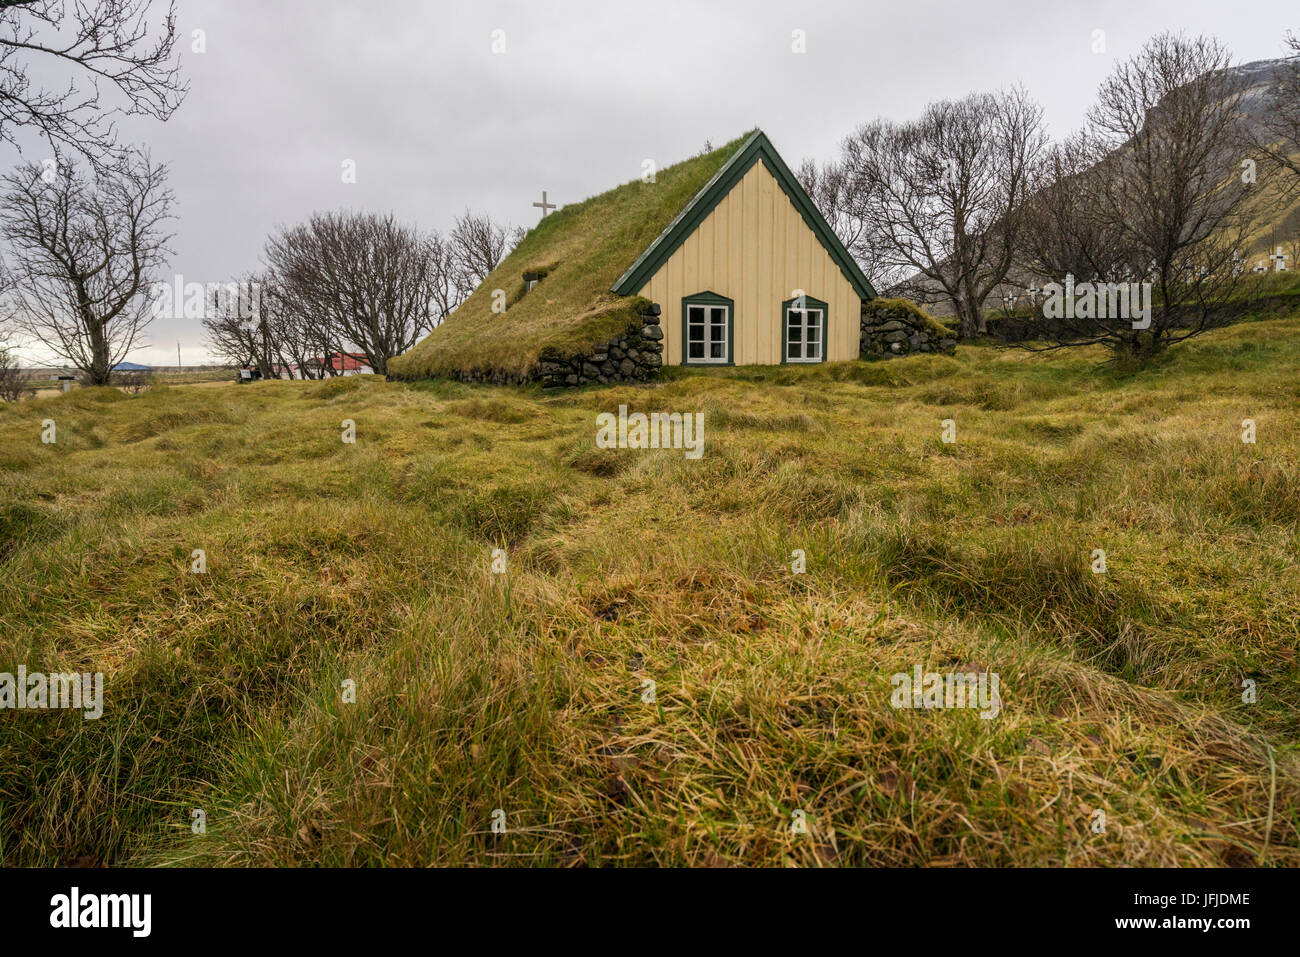 Tipica casa di tappeto erboso, 'torfbaeir' in islandese, Islanda, Europa Foto Stock